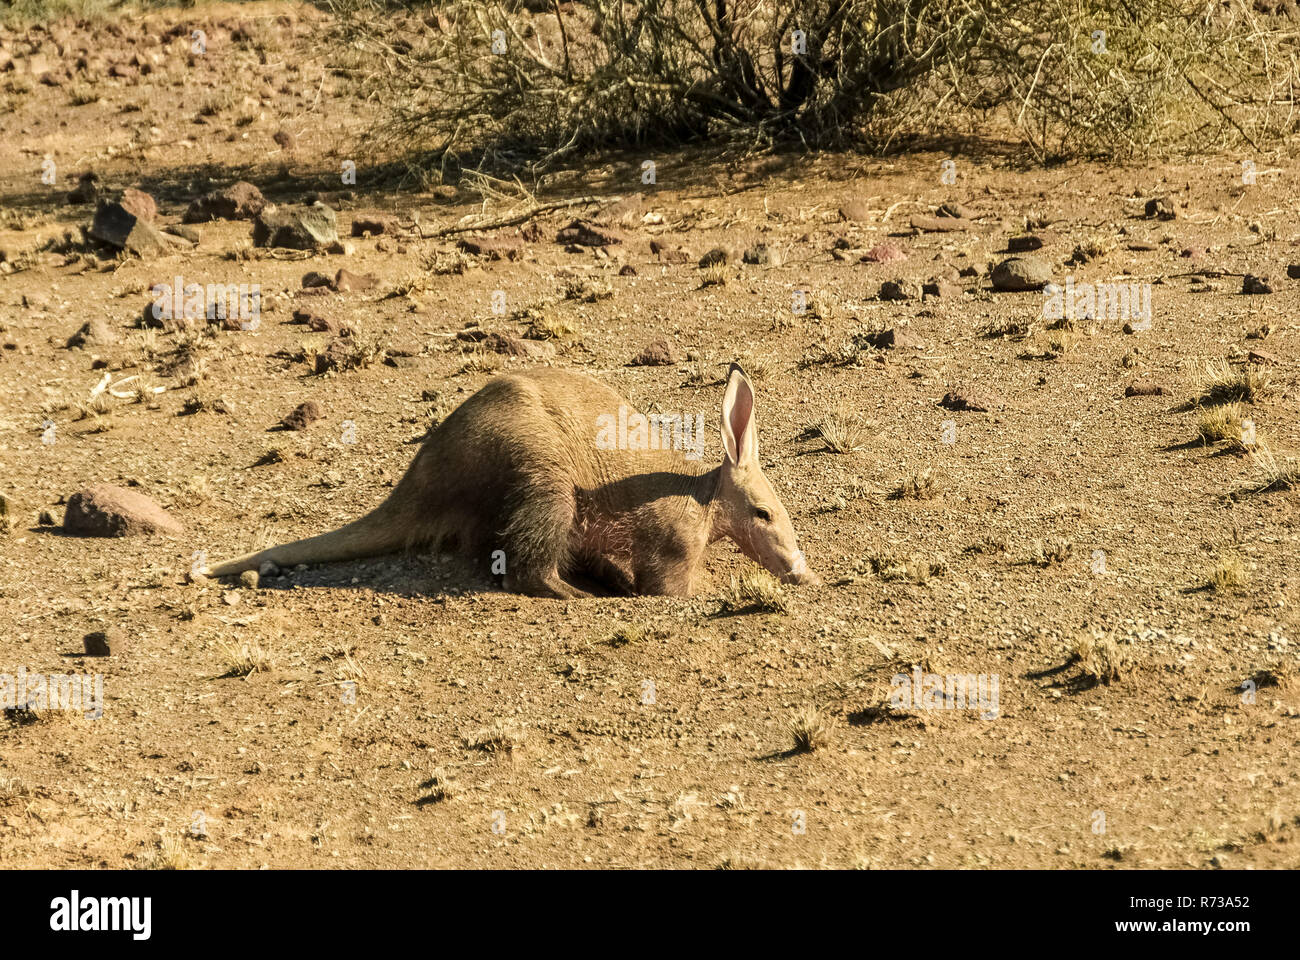 Aardvark, Orycteropus afer, nel deserto del Kalahari in Namibia, Africa Foto Stock